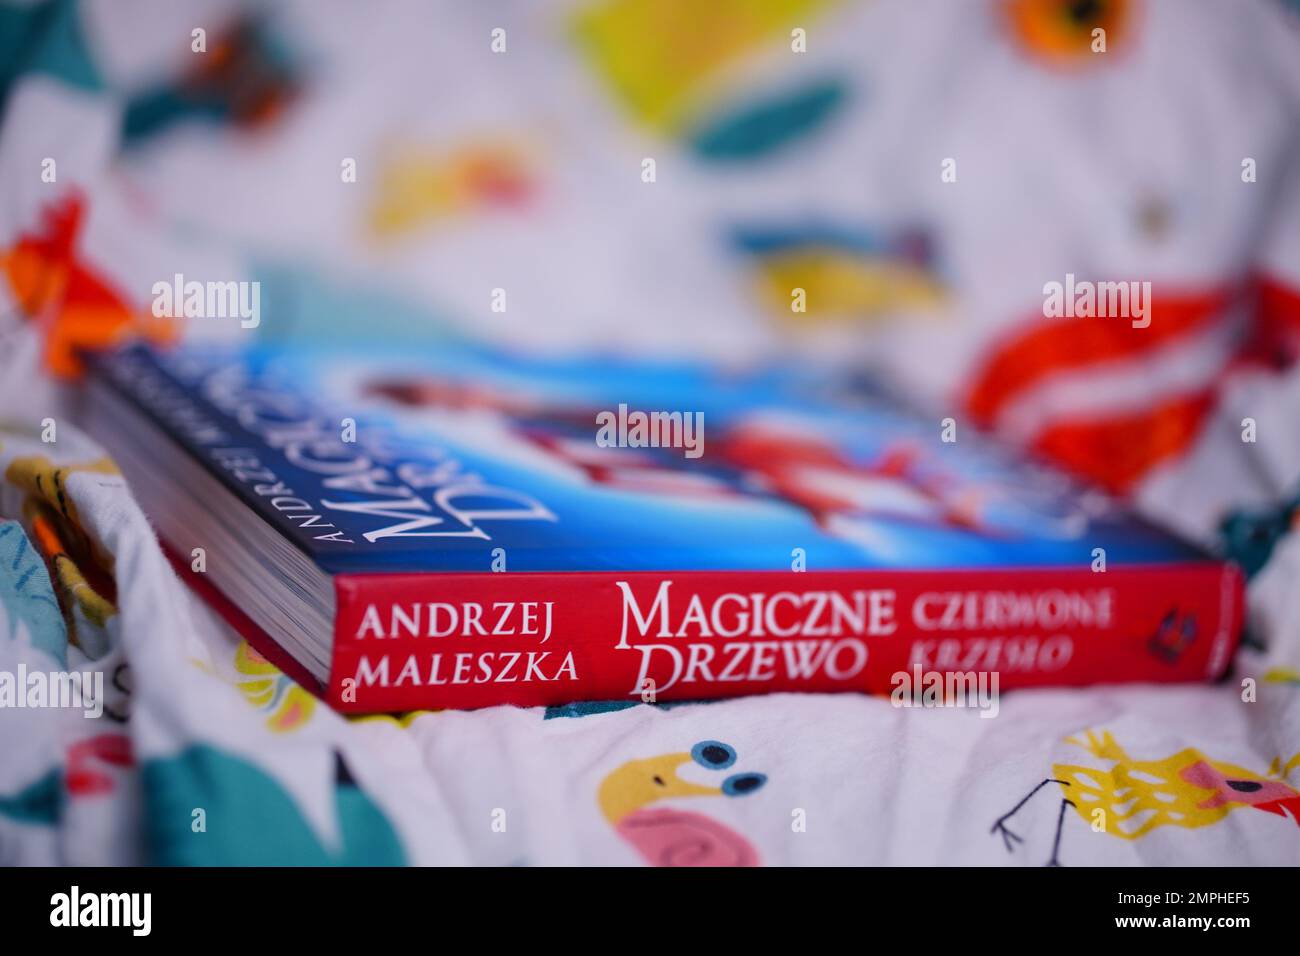 Polish Andrzej Maleszka Magiczne Drzewo novel for children on a bed sheet Stock Photo